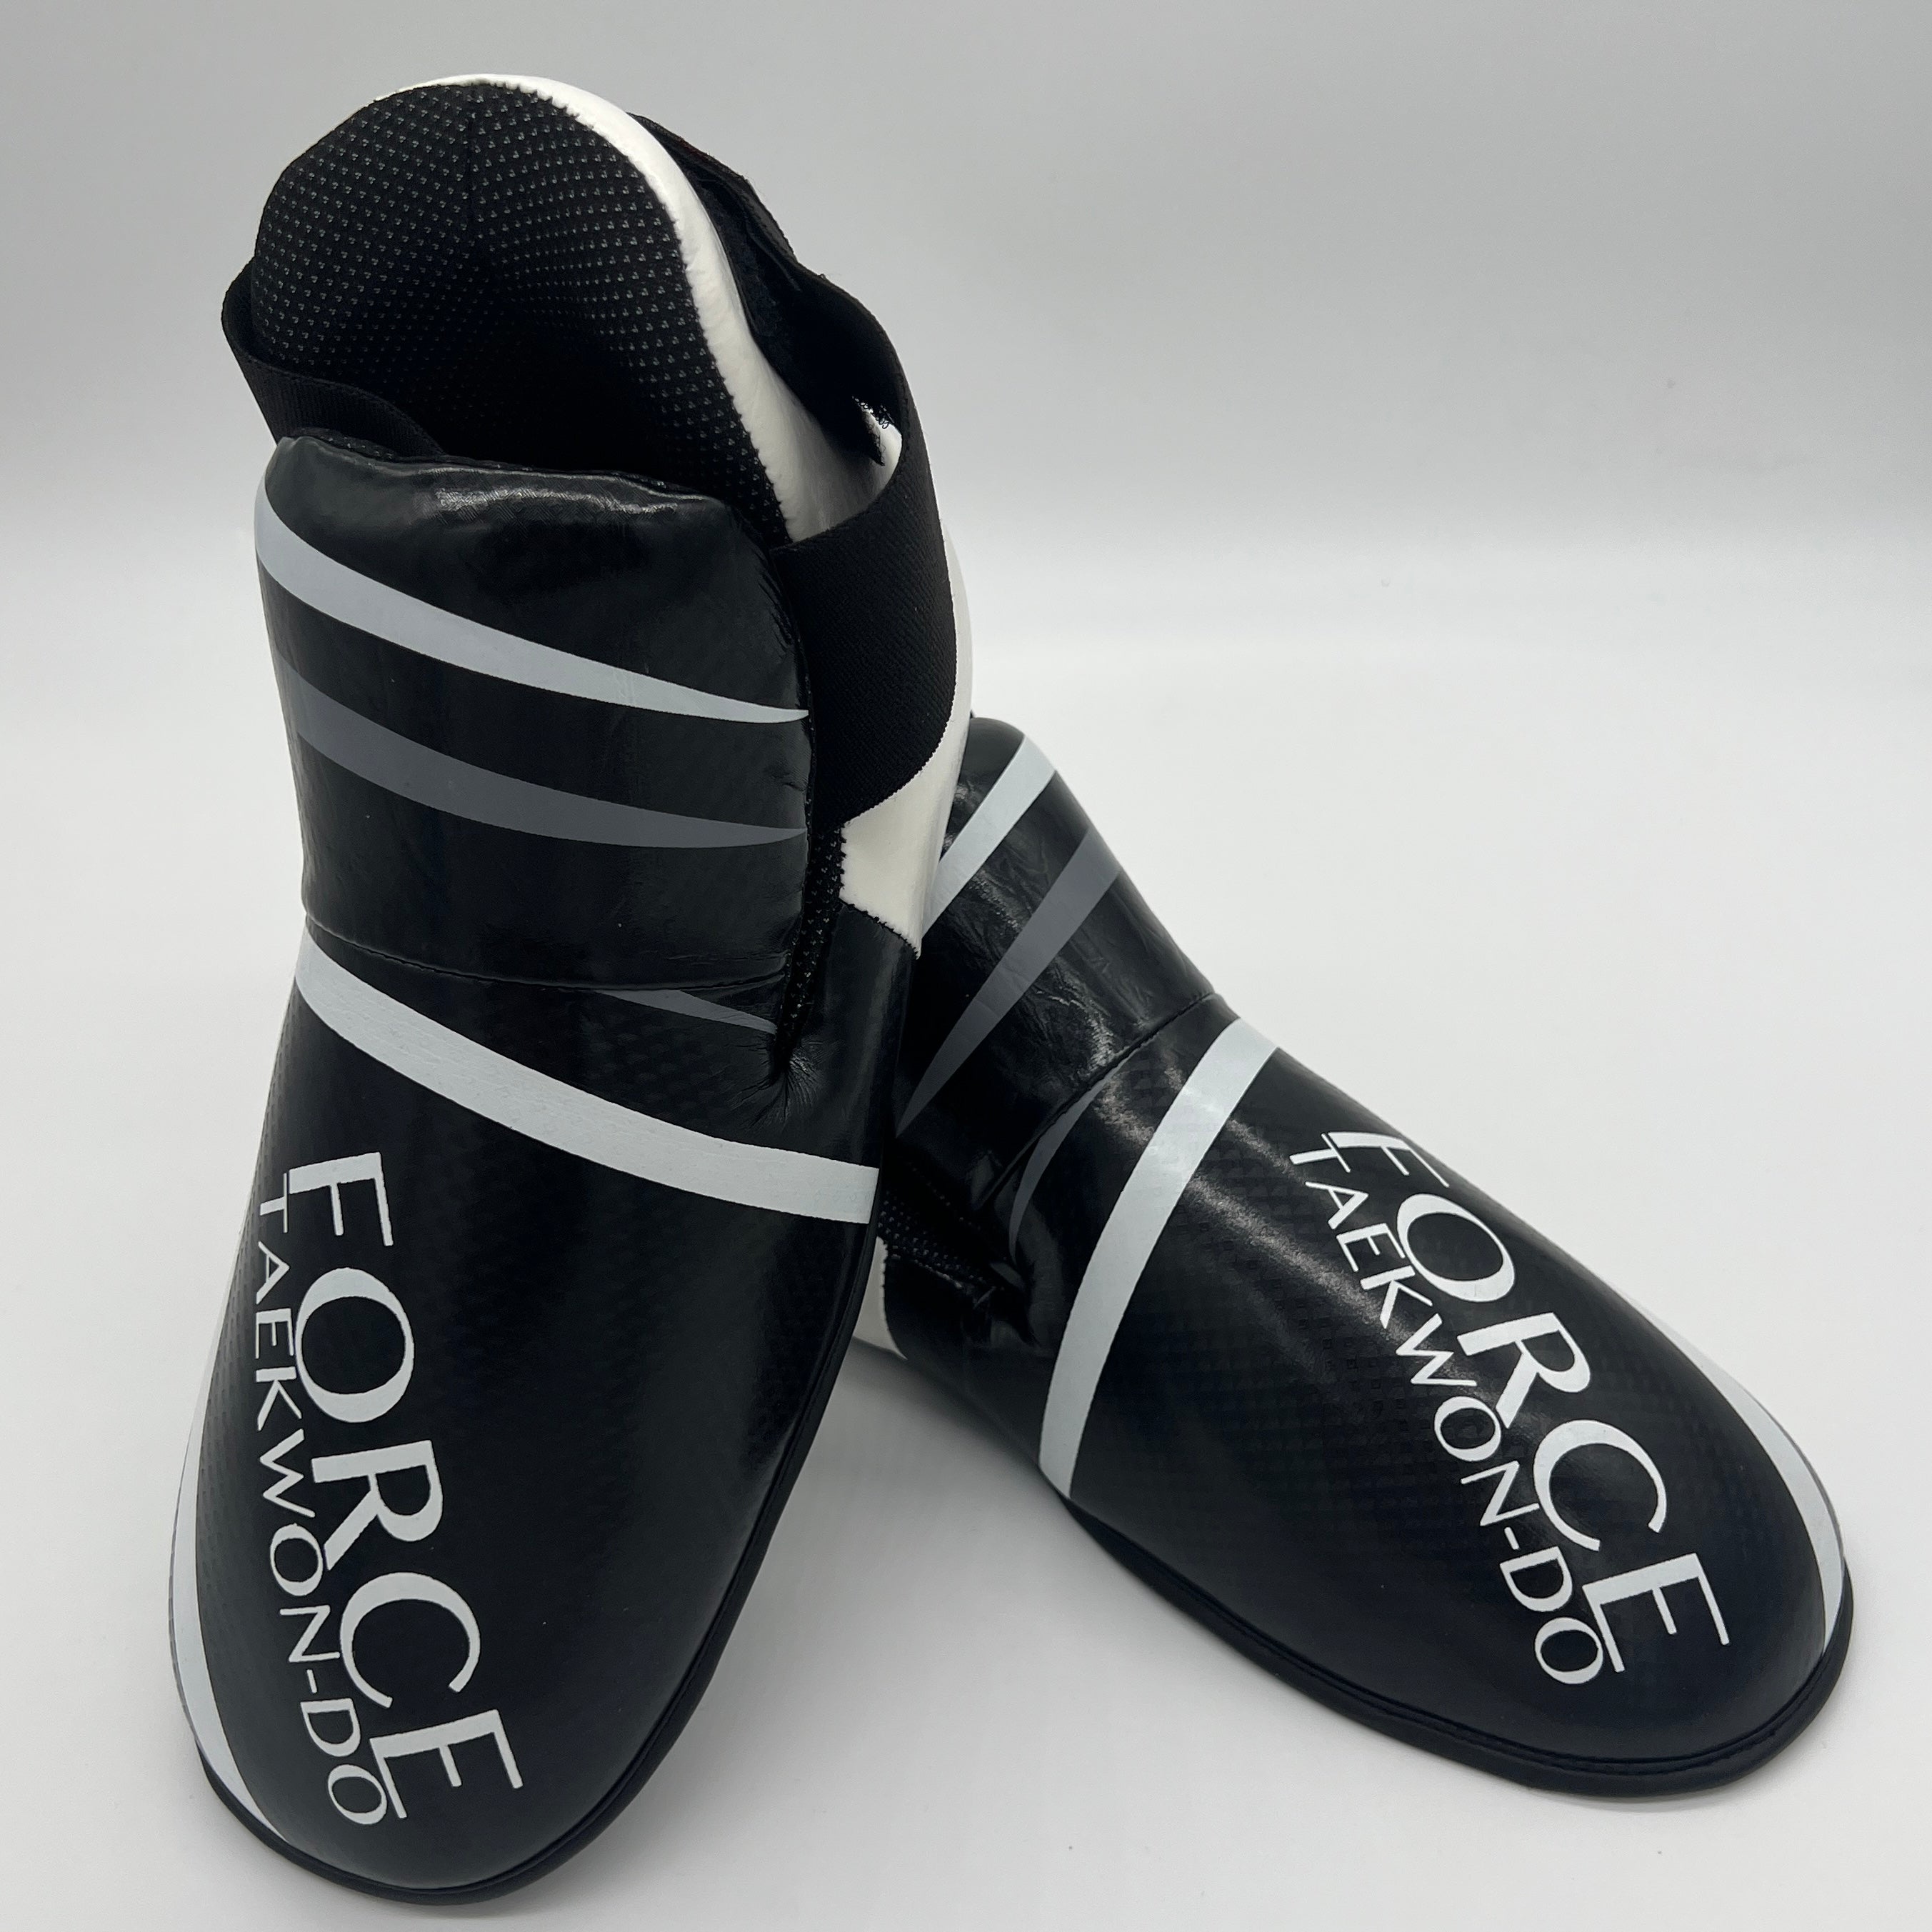 Force Taekwon-do Kick Boots